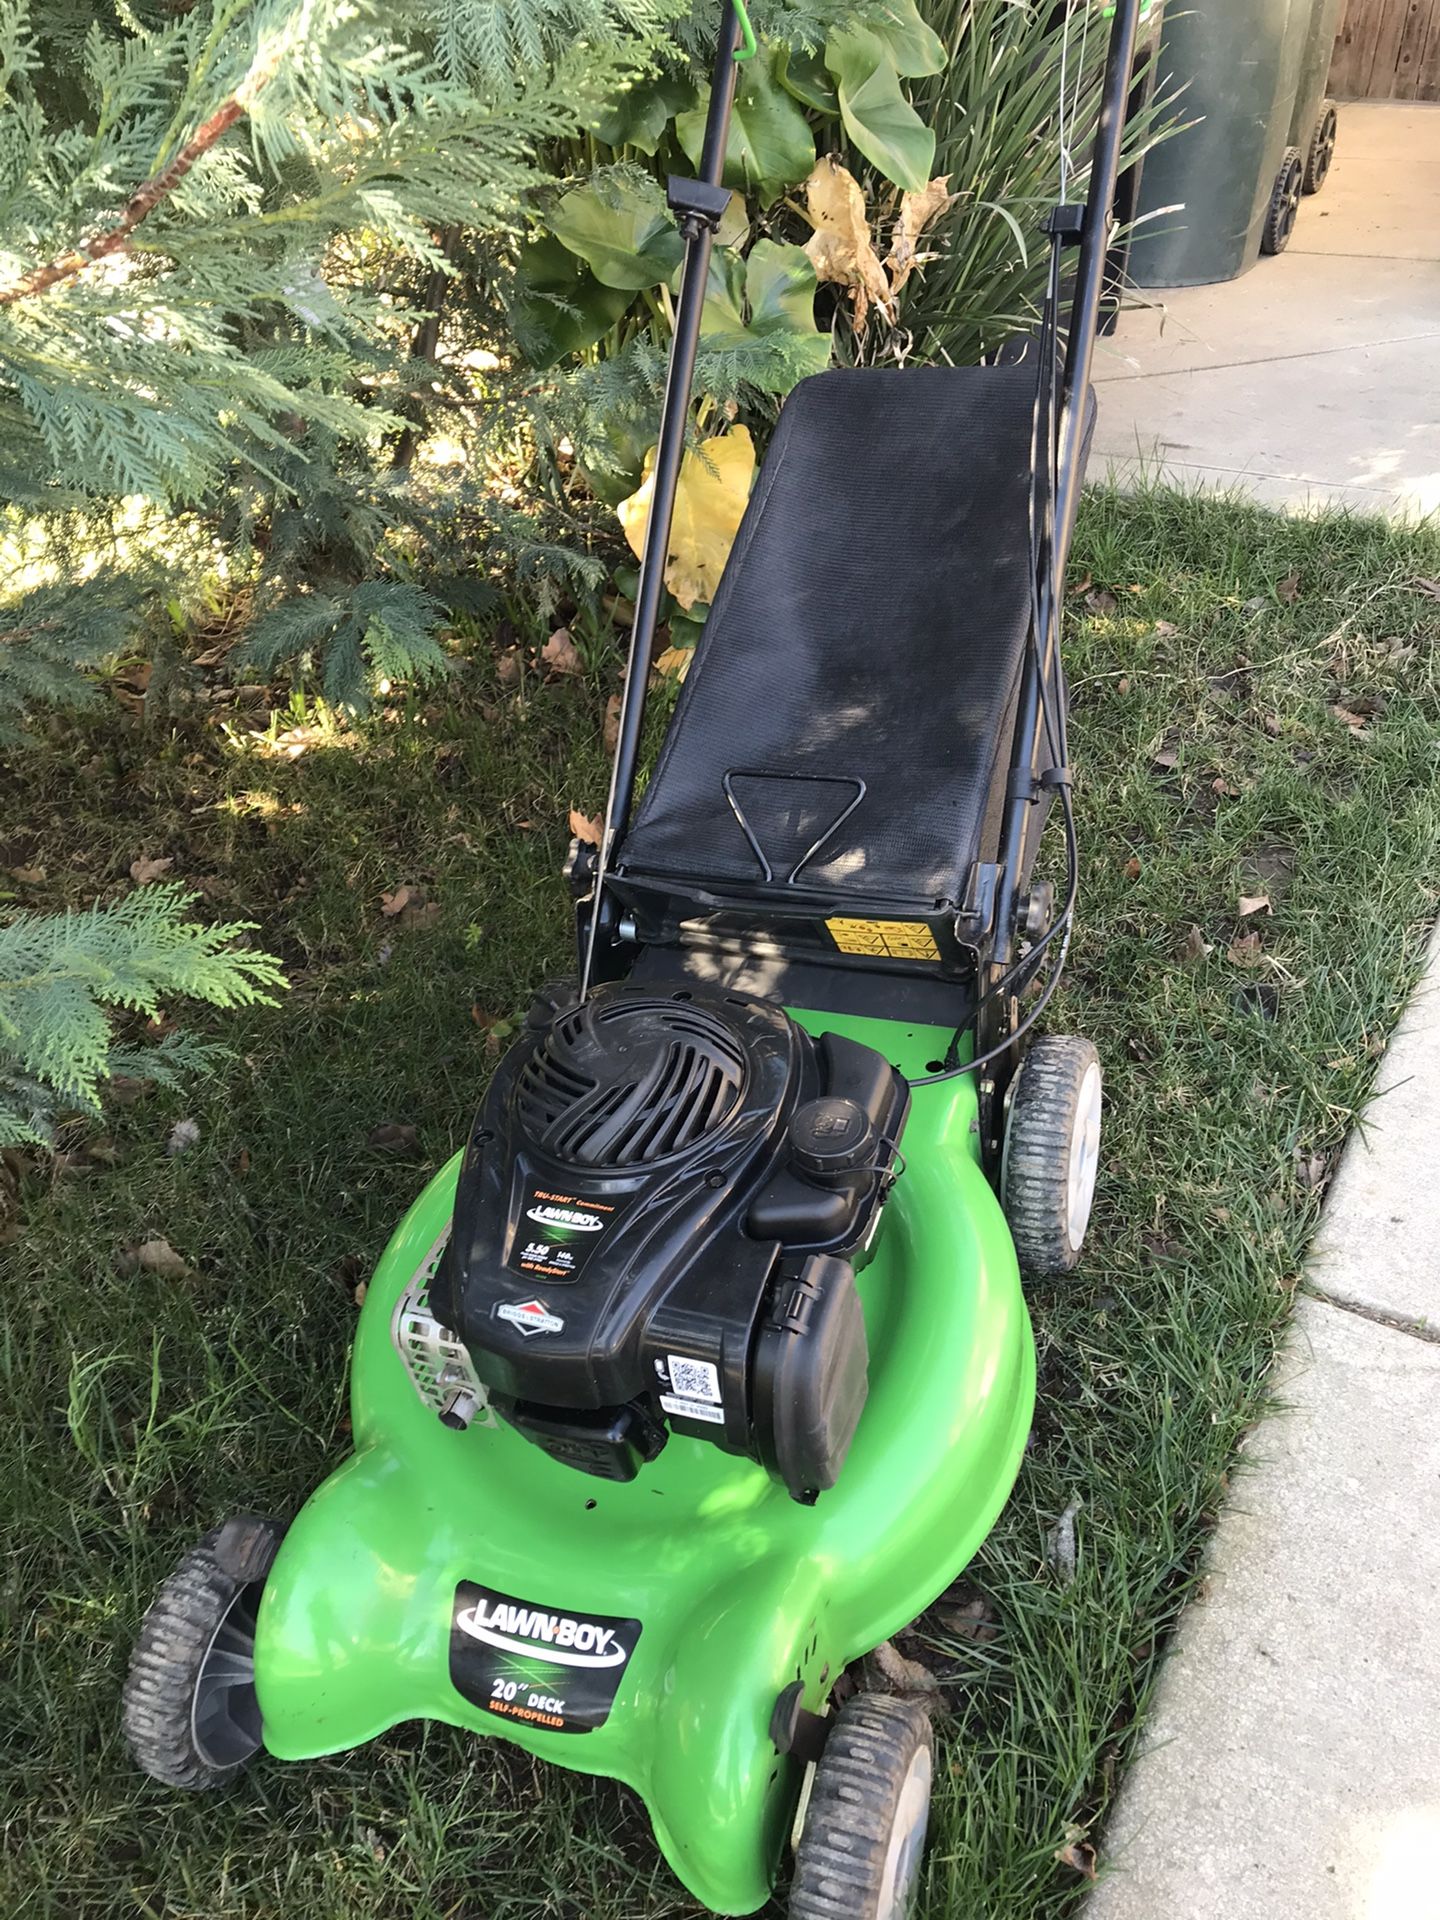 Lawn Boy lawn mower self propelled